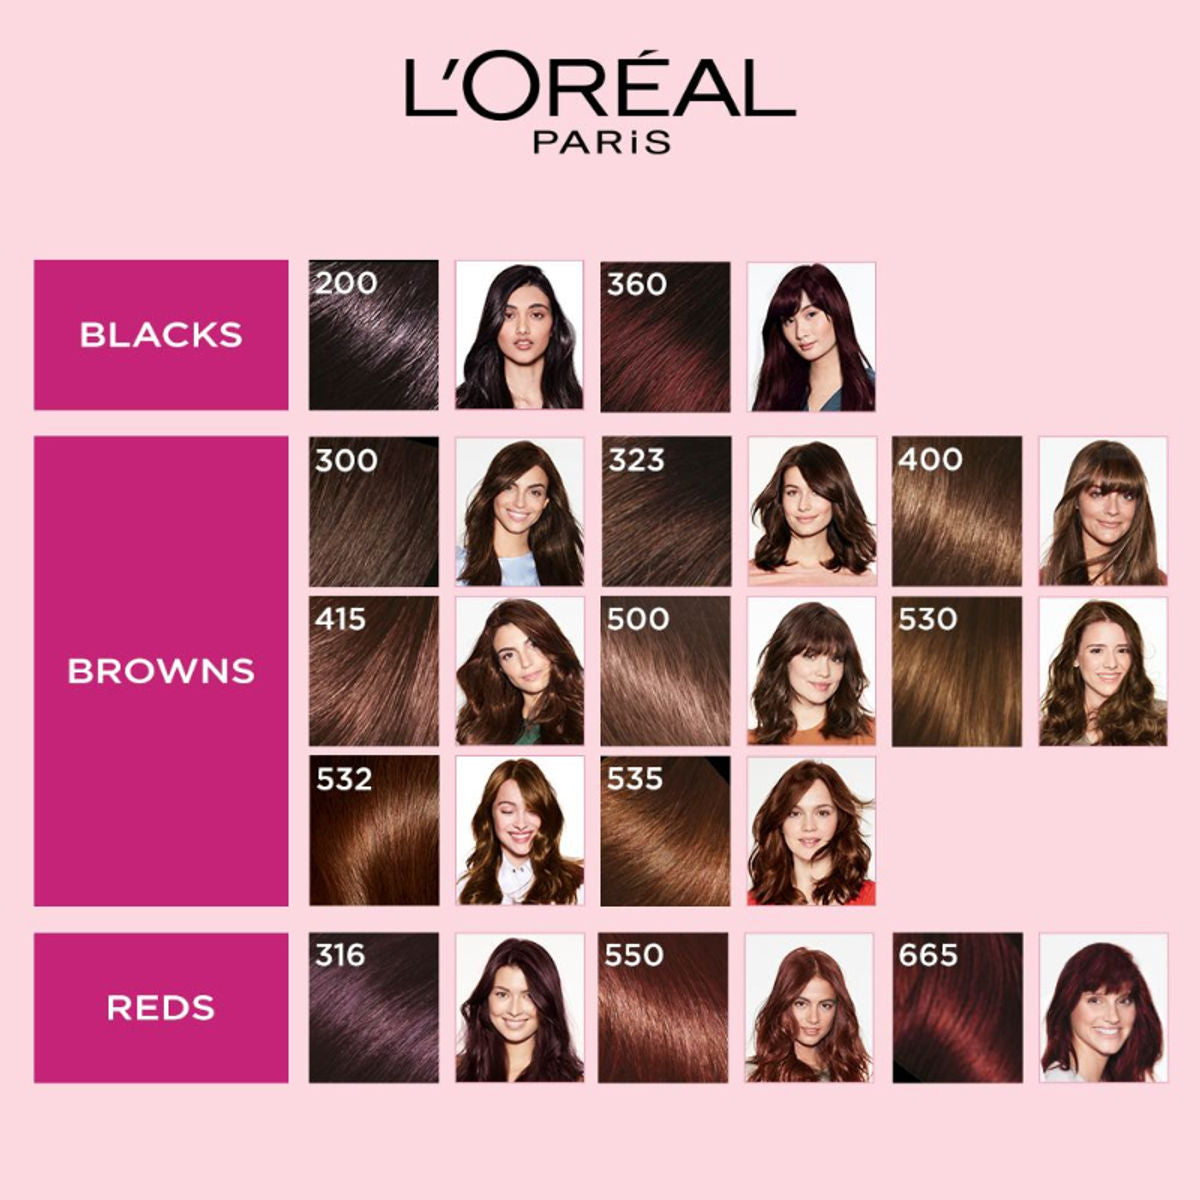 L'Oreal Paris Casting Creme Gloss Hair Color - Darkest Brown 300 (87.5 g + 72 ml) L'Oreal Paris